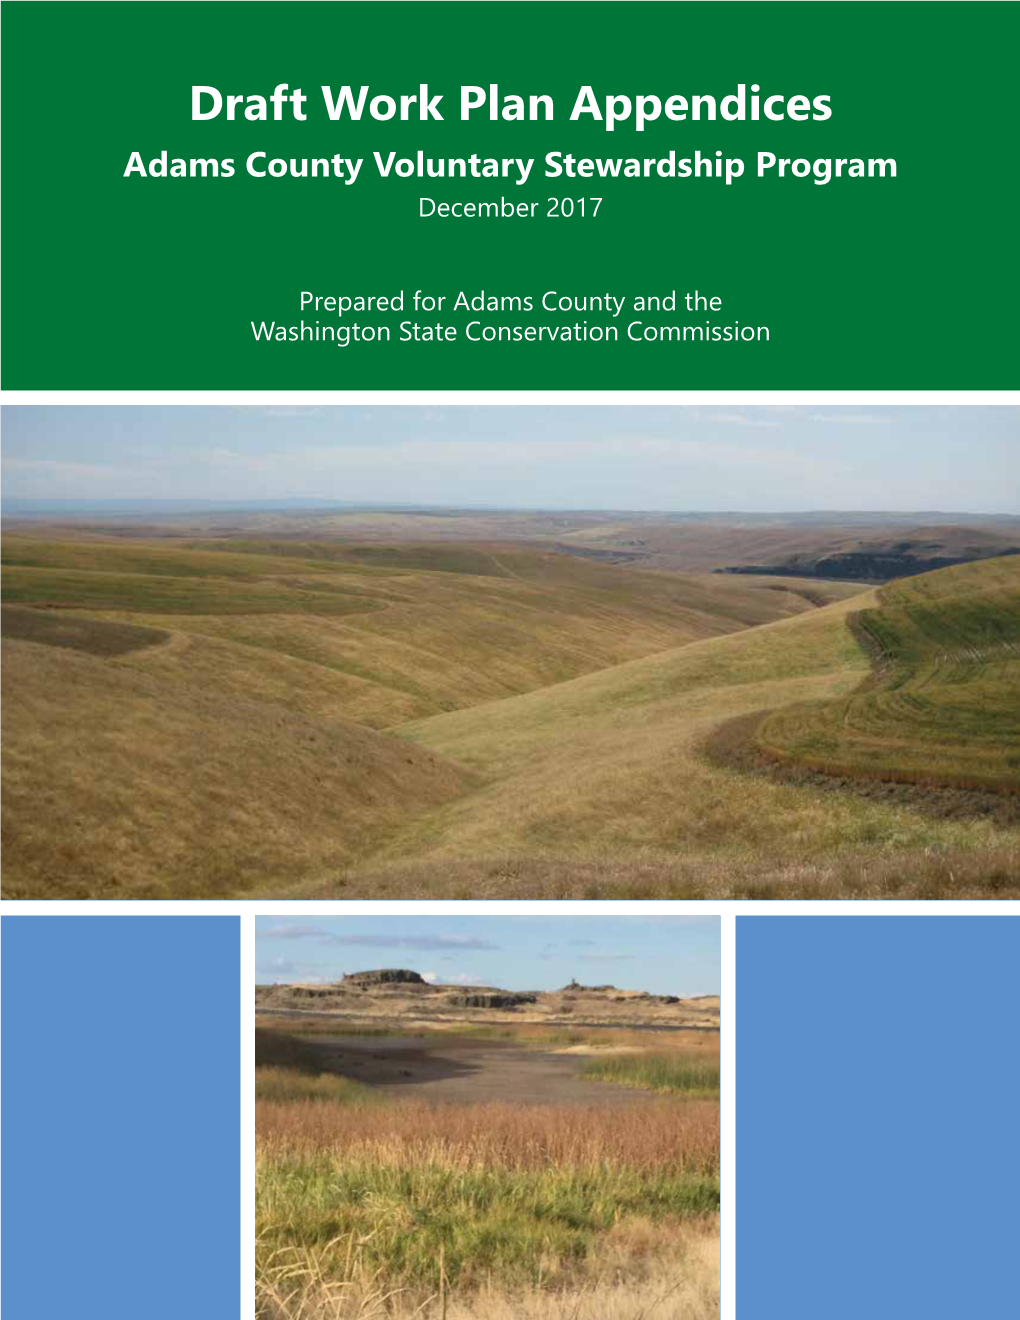 Adams County Voluntary Stewardship Program Draft Work Plan Appendices